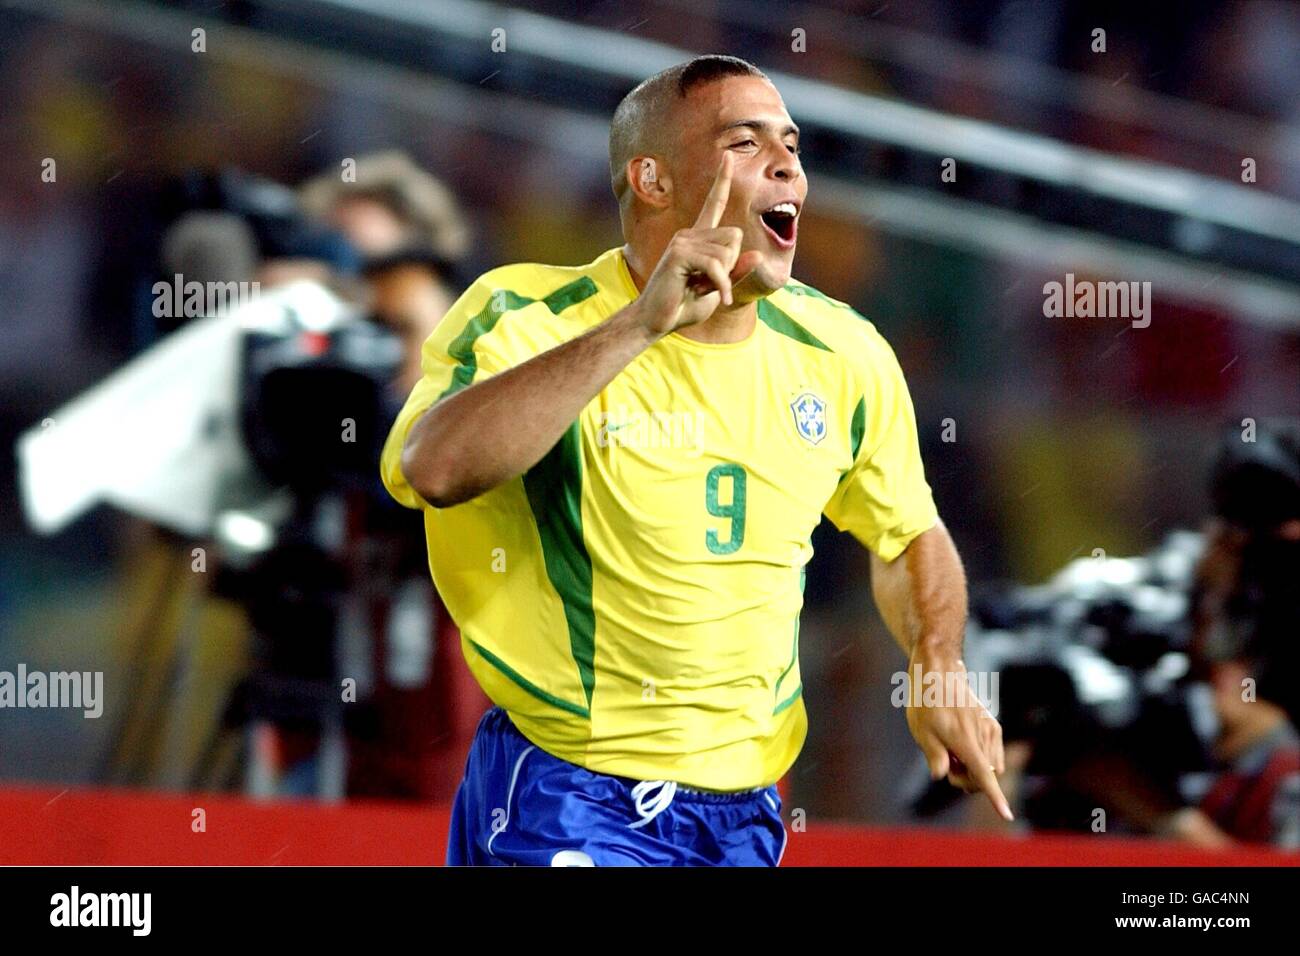 Soccer - FIFA World Cup 2002 - Final - Germany v Brazil. Brazil's Ronaldo celebrates scoring Stock Photo